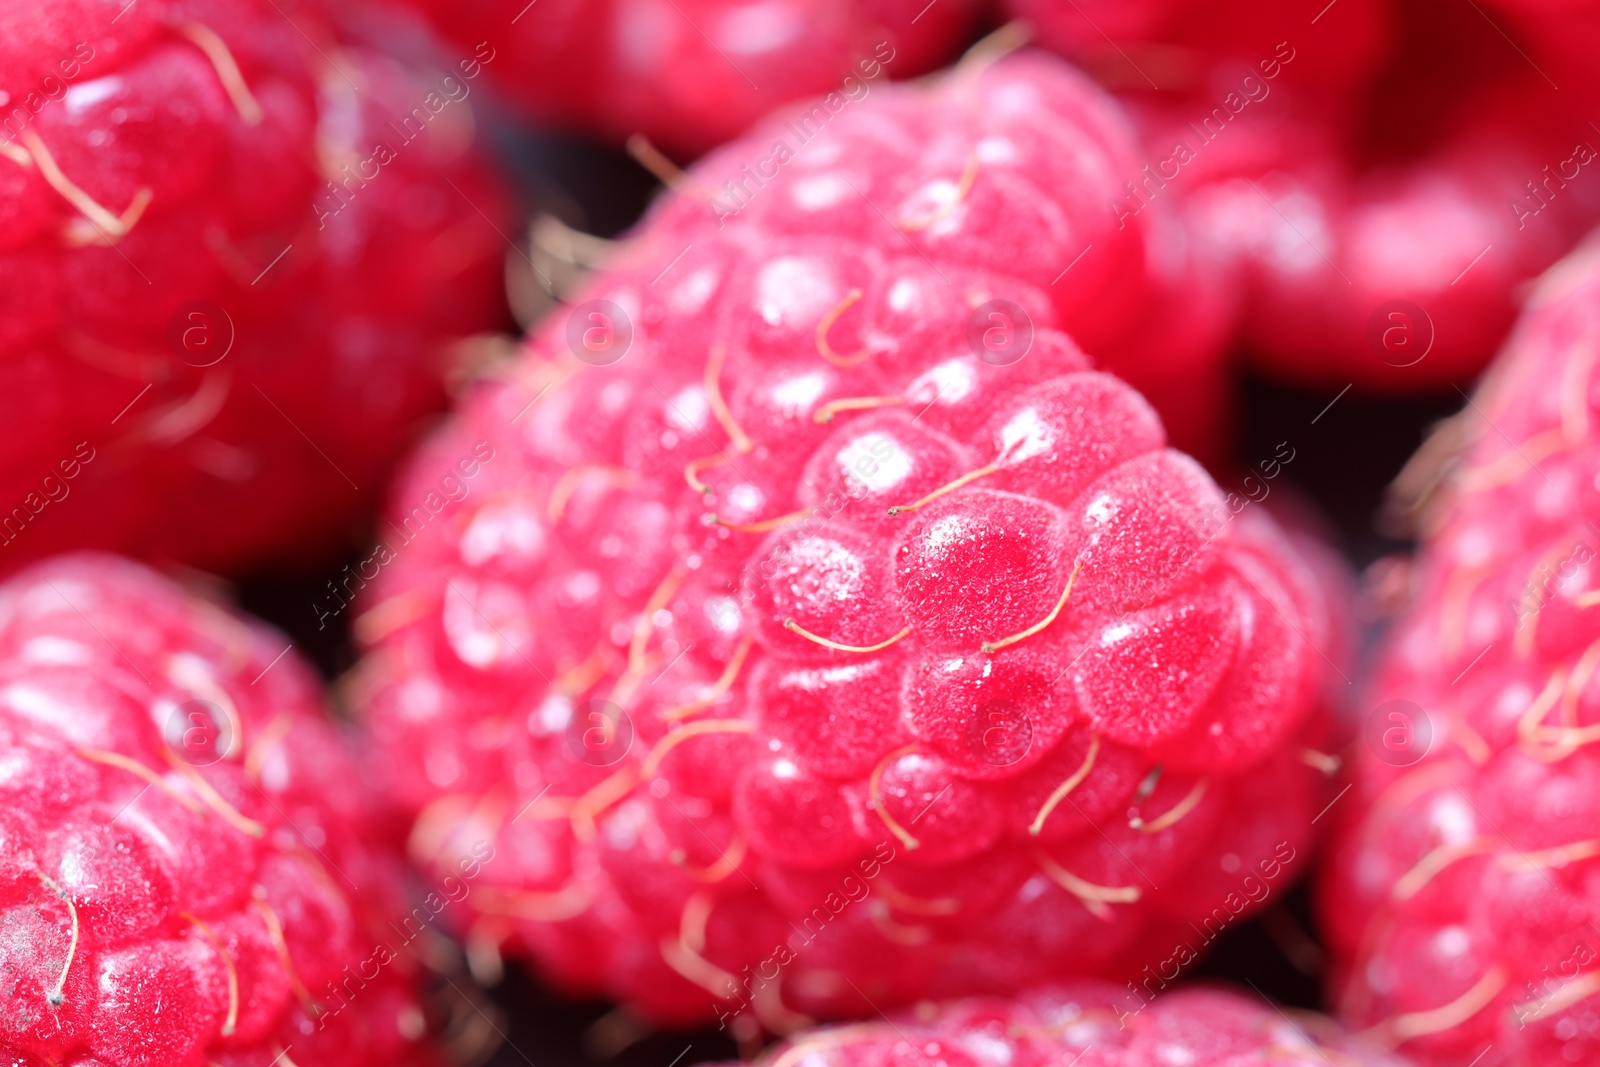 Photo of Tasty fresh ripe raspberries as background, macro view